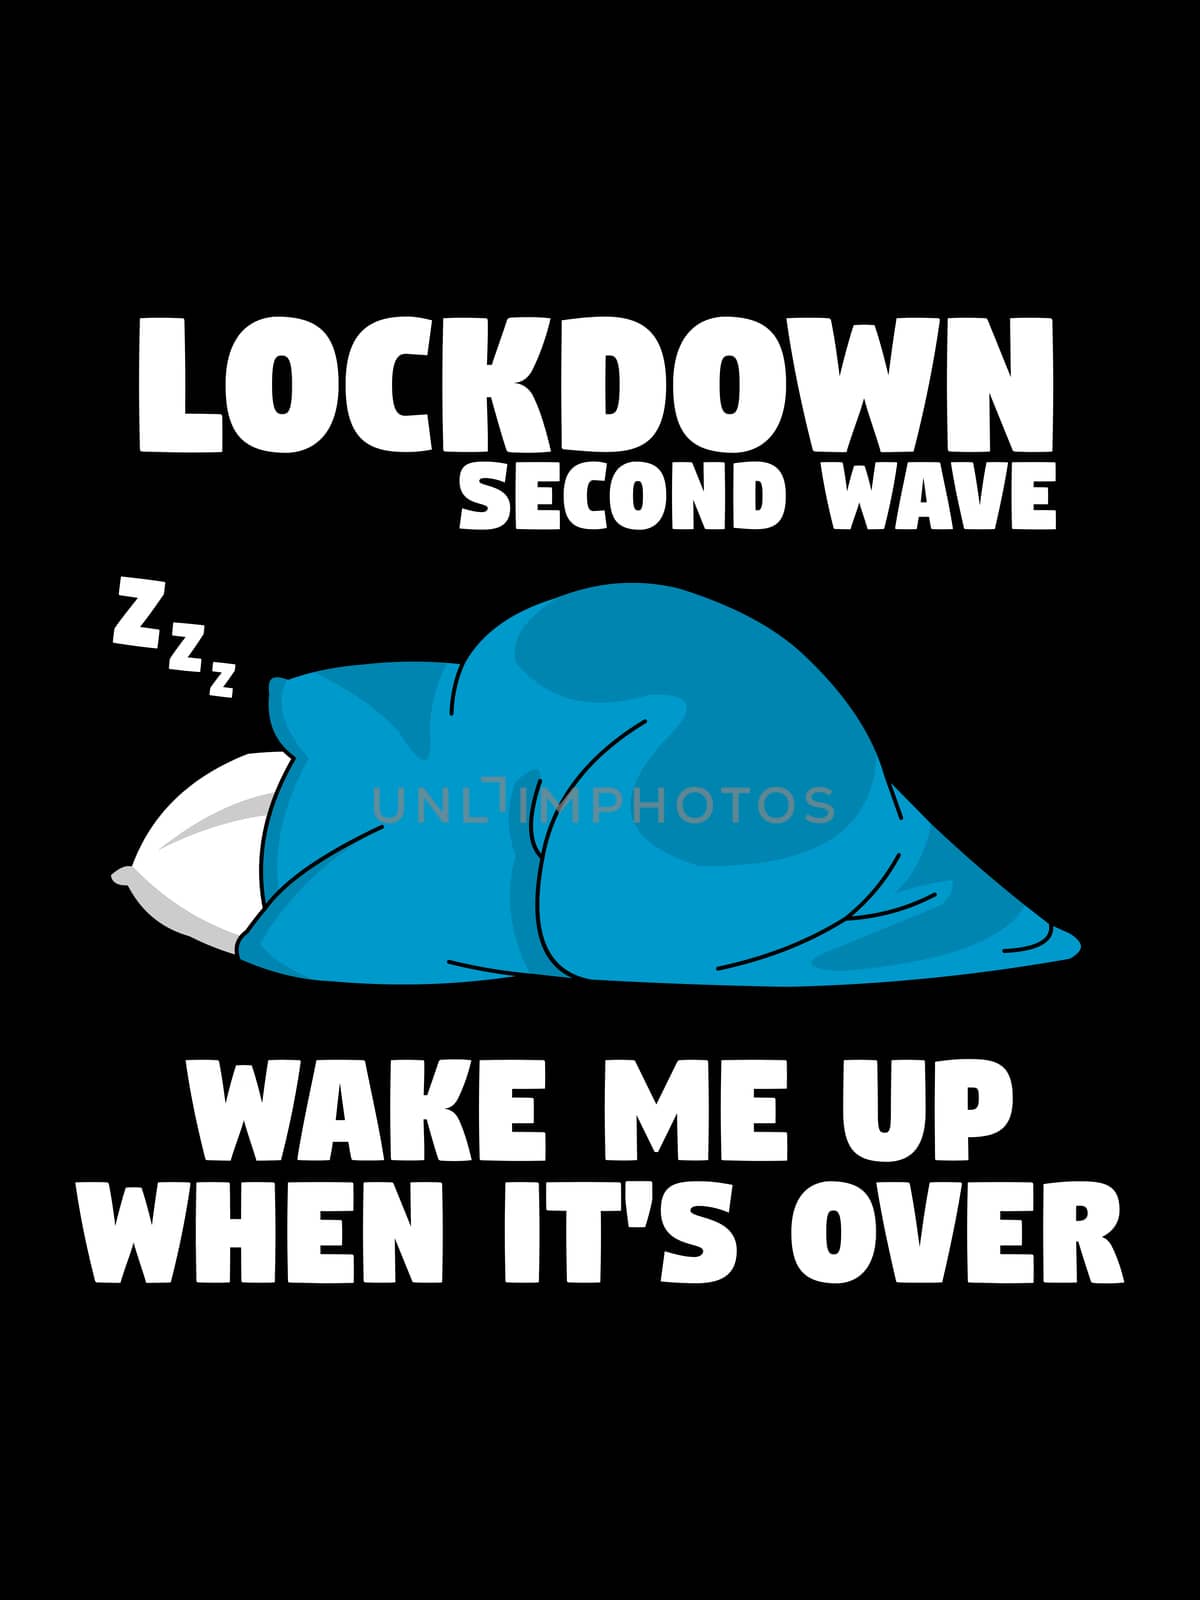 Lockdown second wave by Bigalbaloo